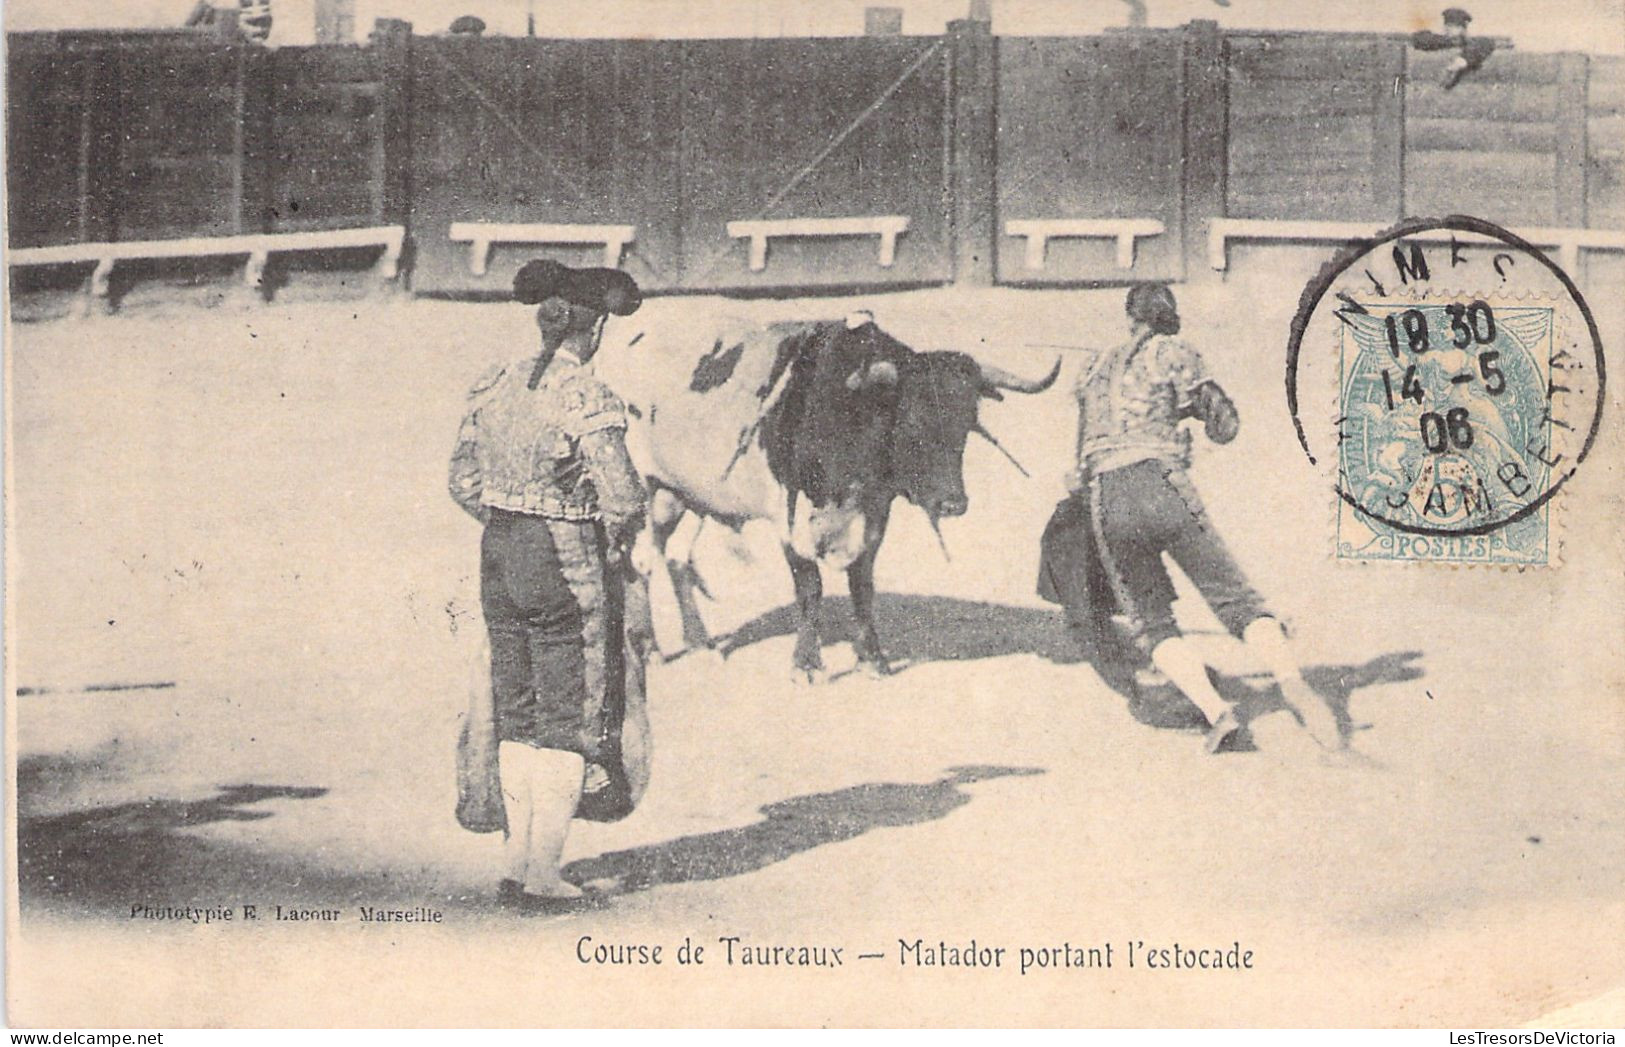 CORRIDA - Course De Taureaux - Matador Portant L'estocade - Carte Postale Ancienne - Stierkampf